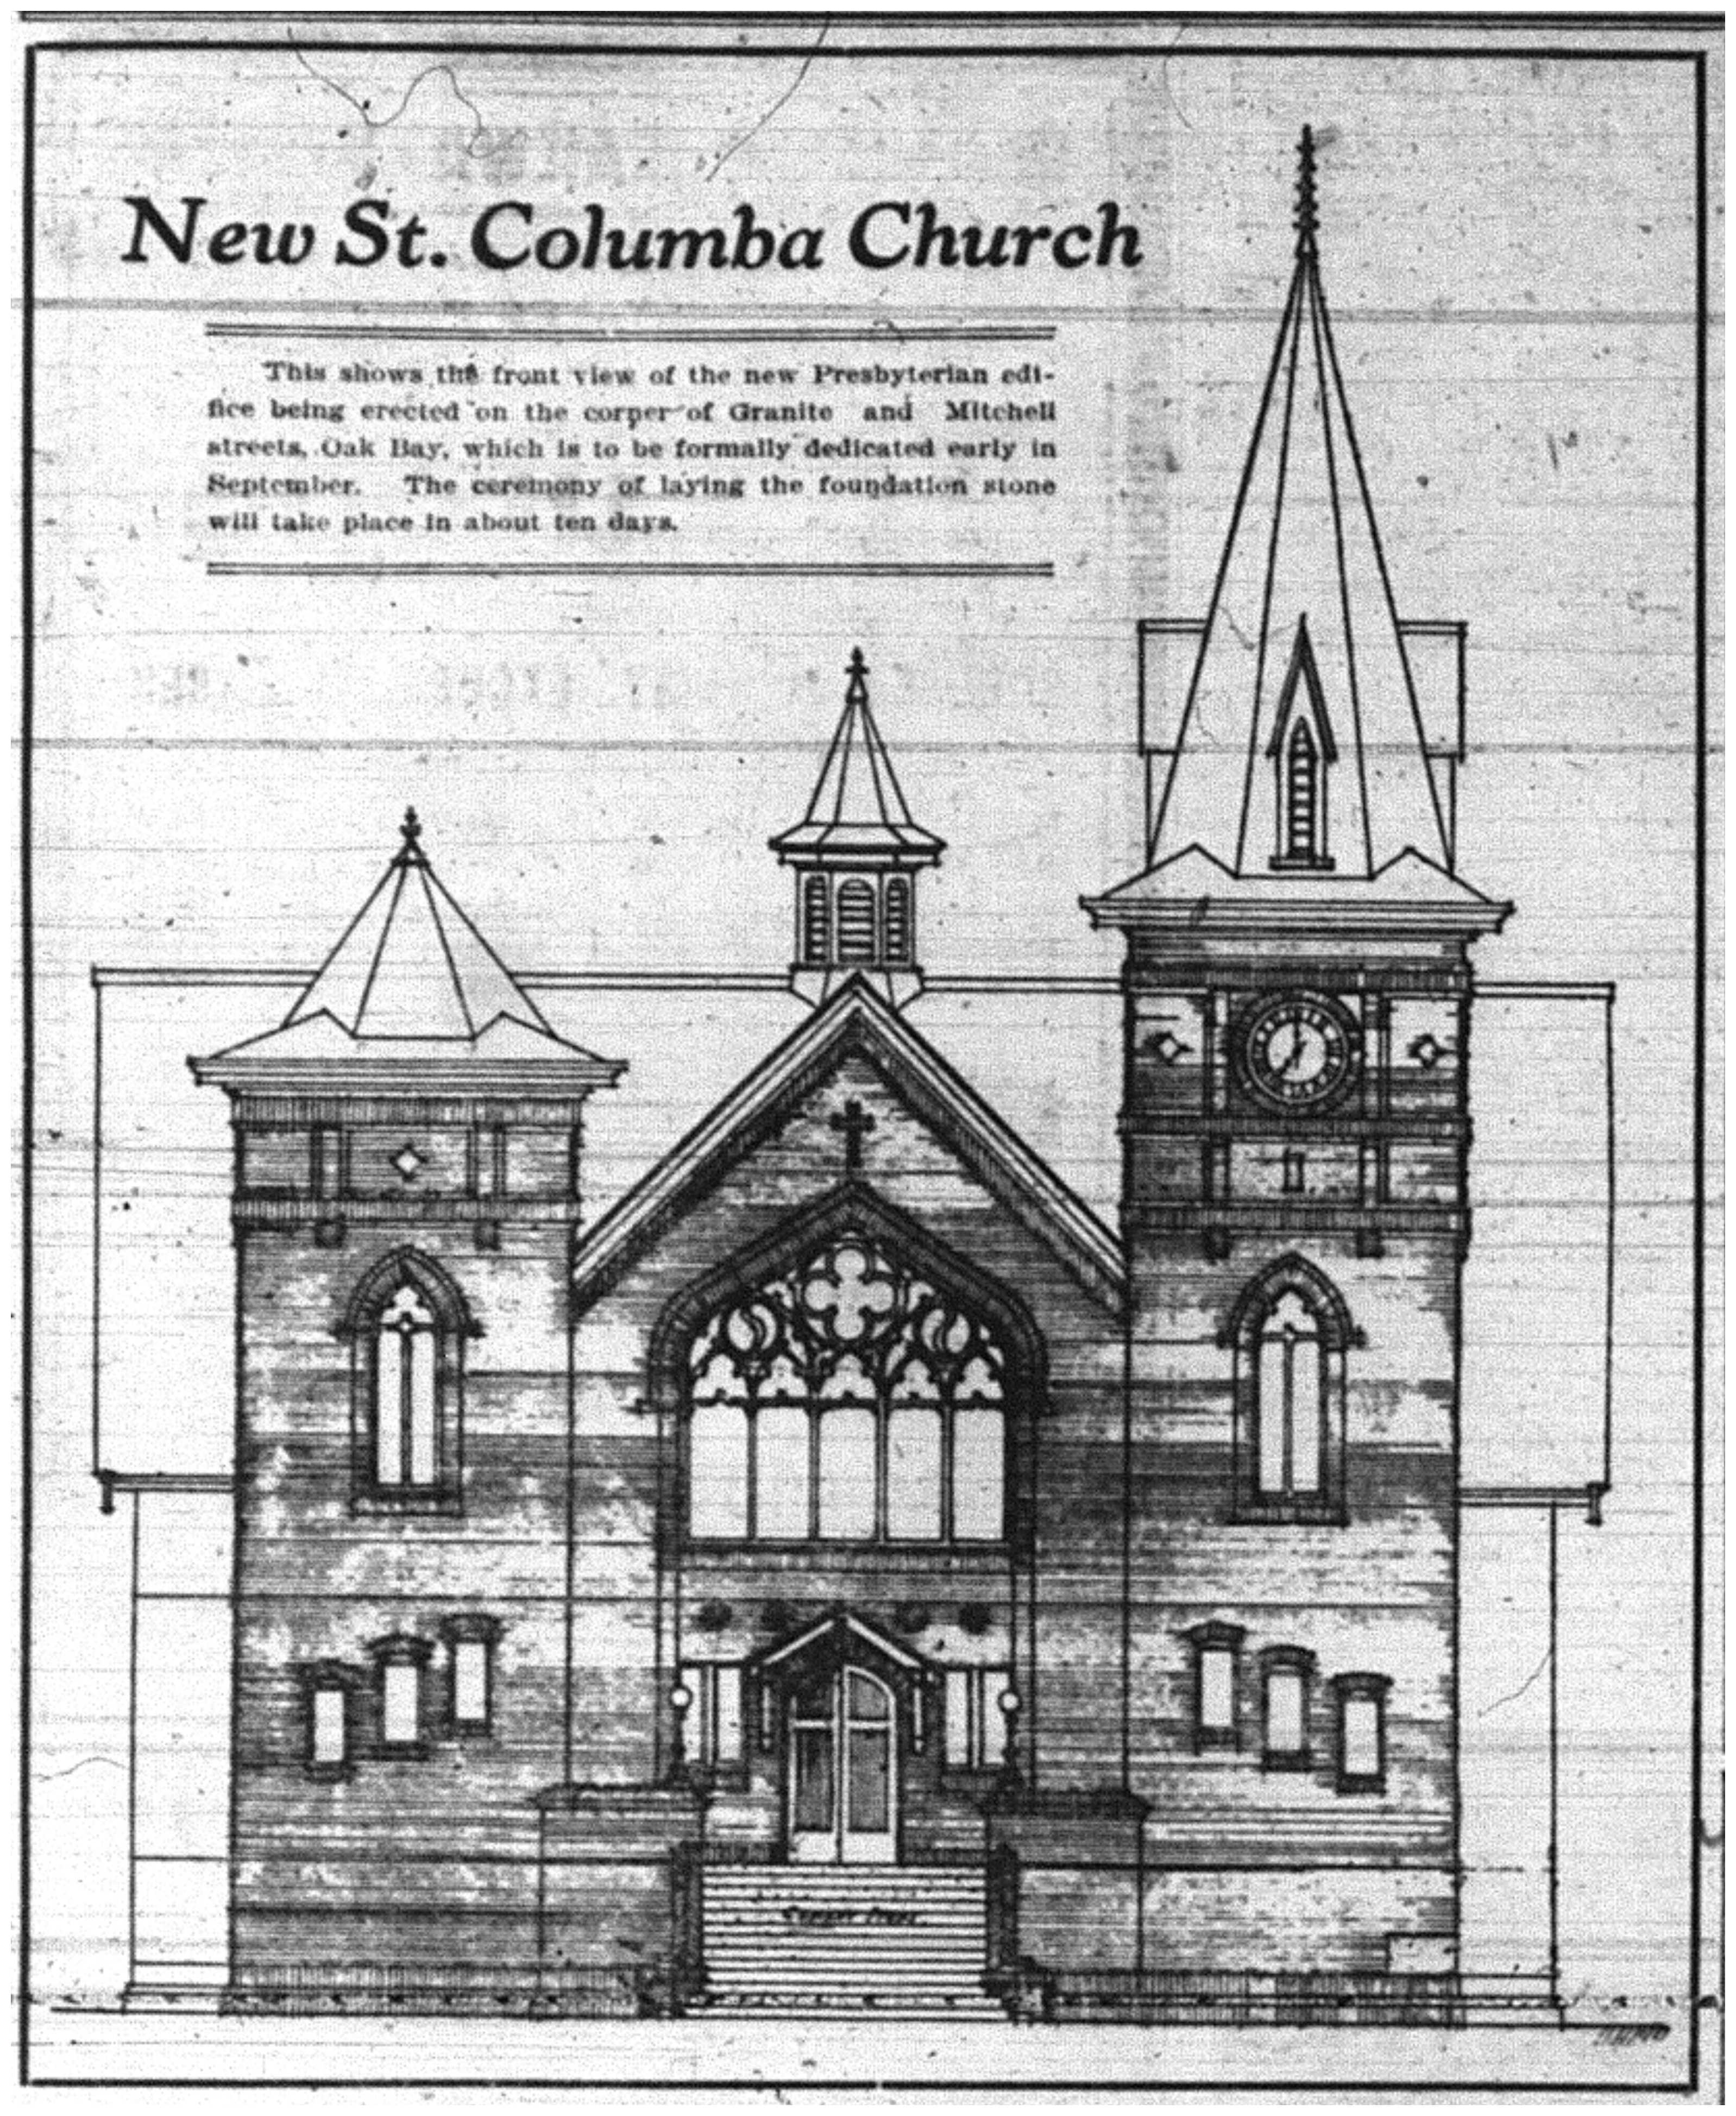 "New St. Columba Church"